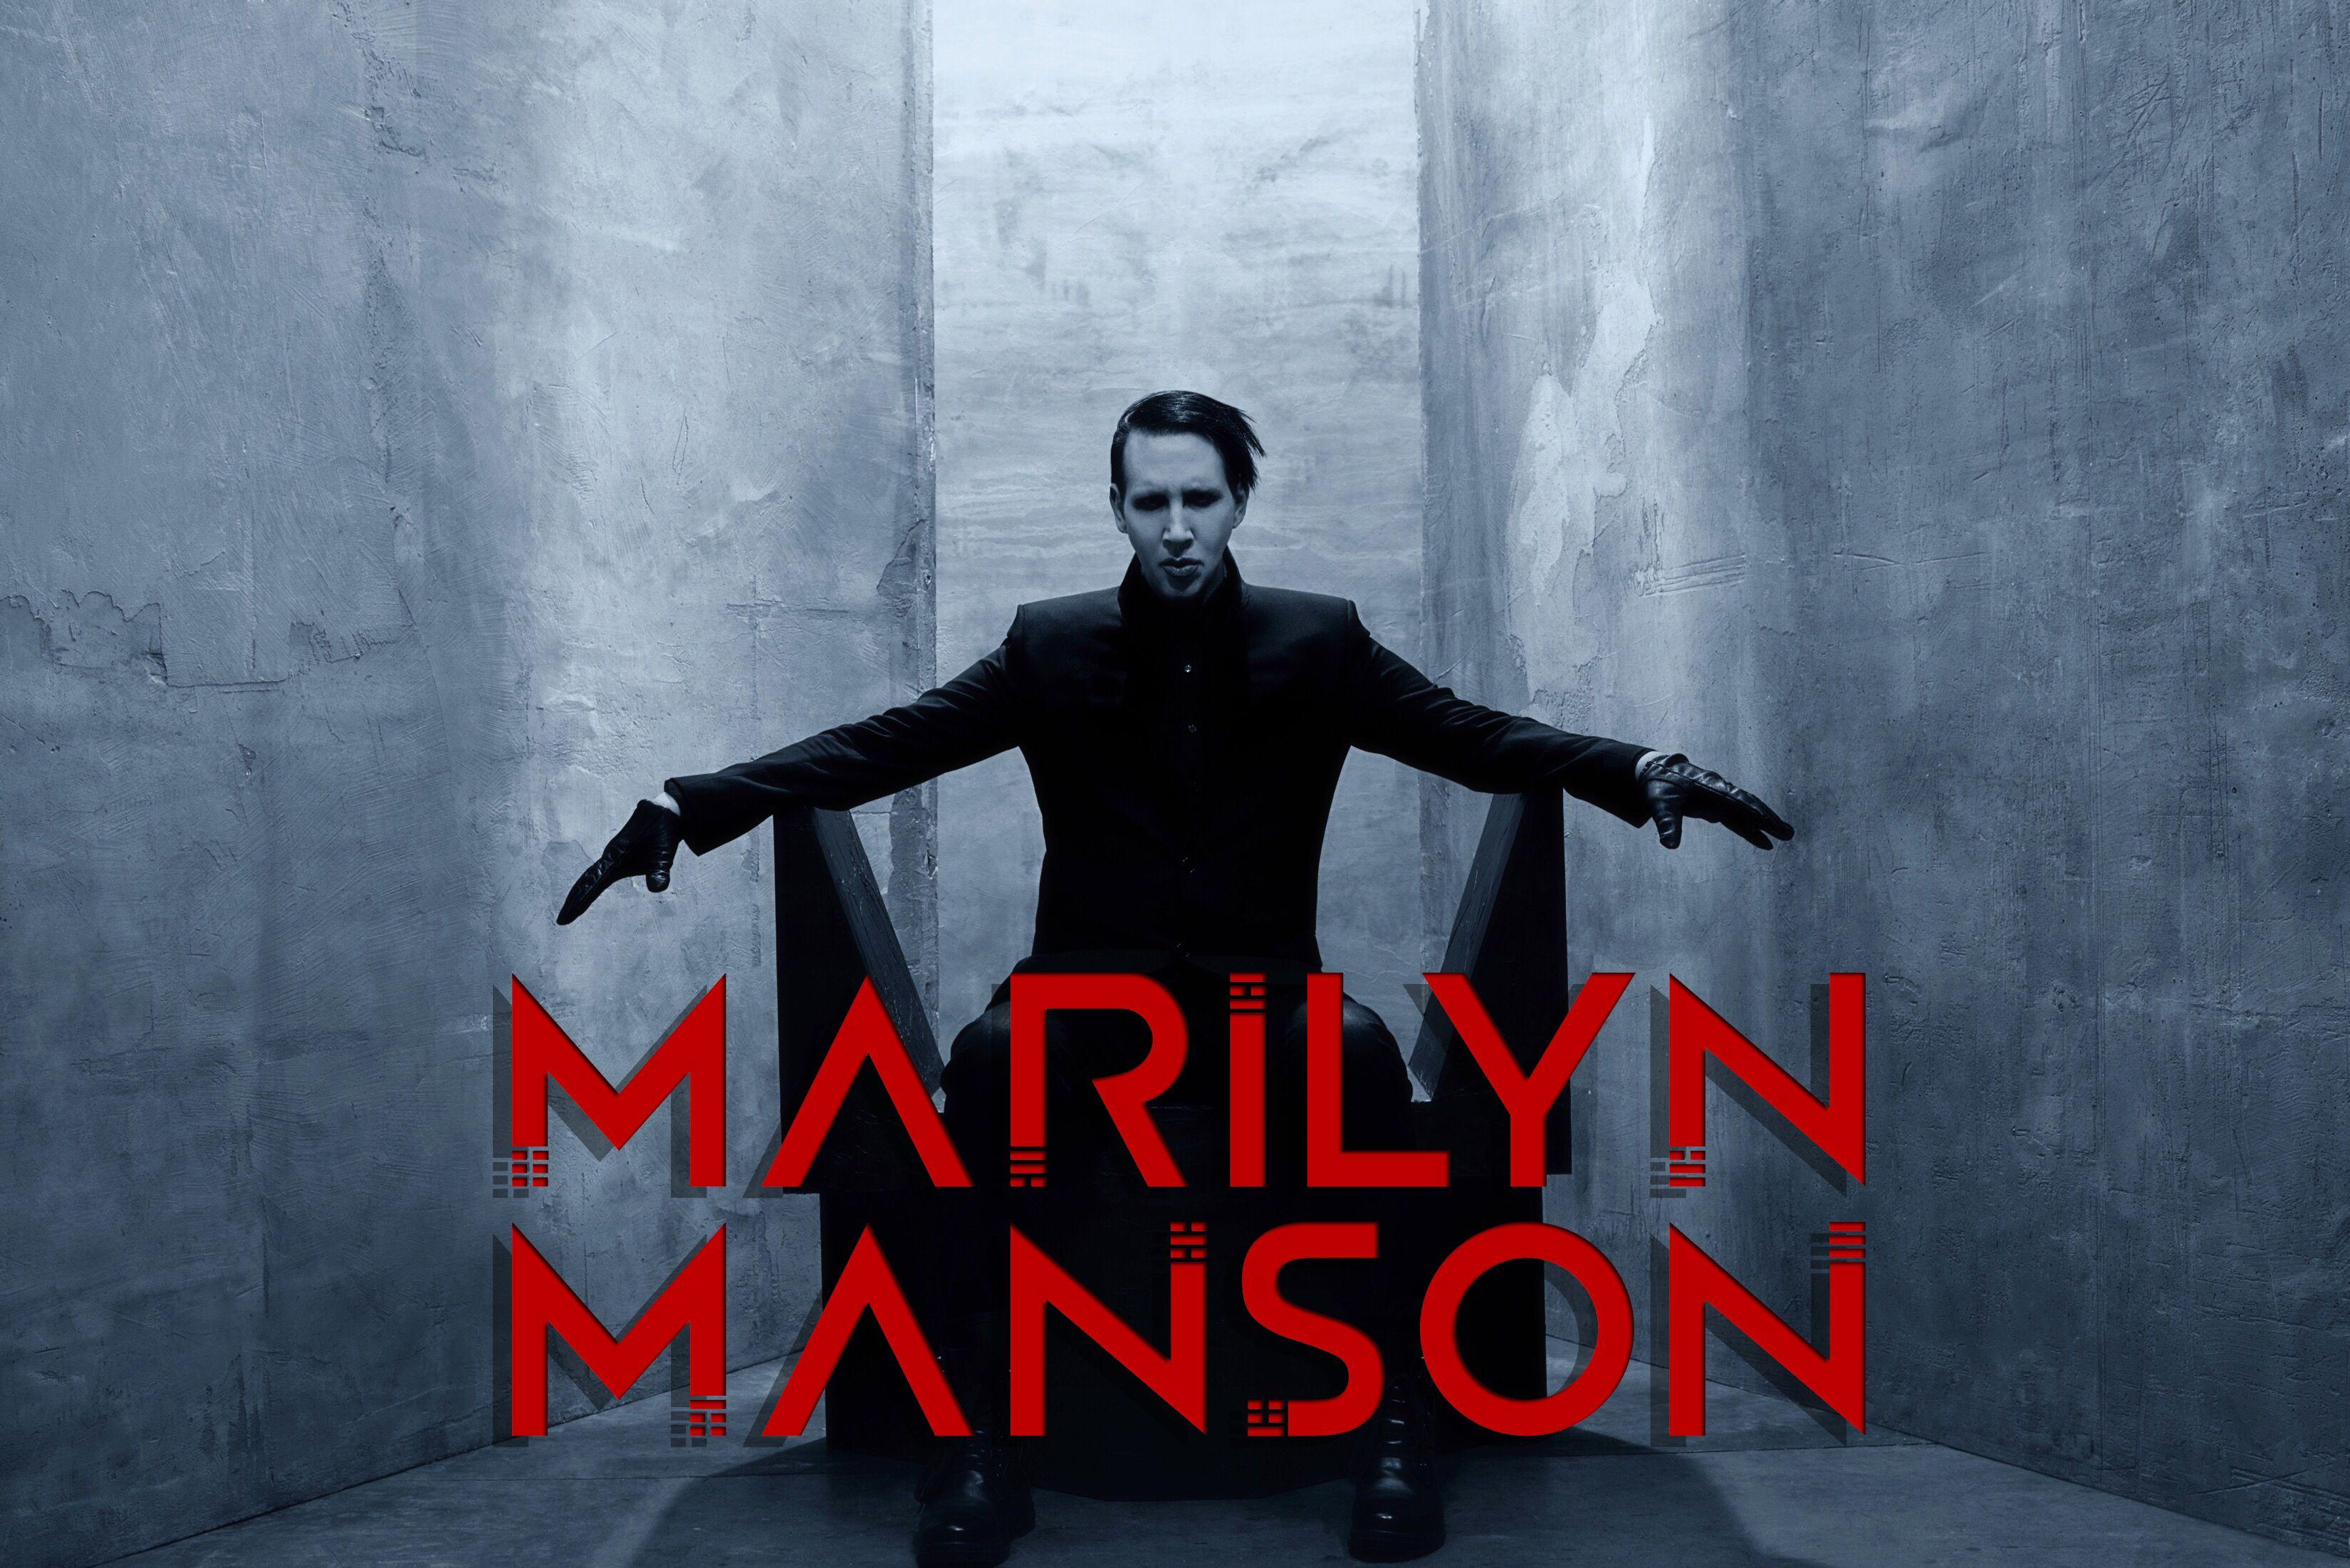 Marilyn Manson Wallpaper, Gallery of 32 Marilyn Manson Background